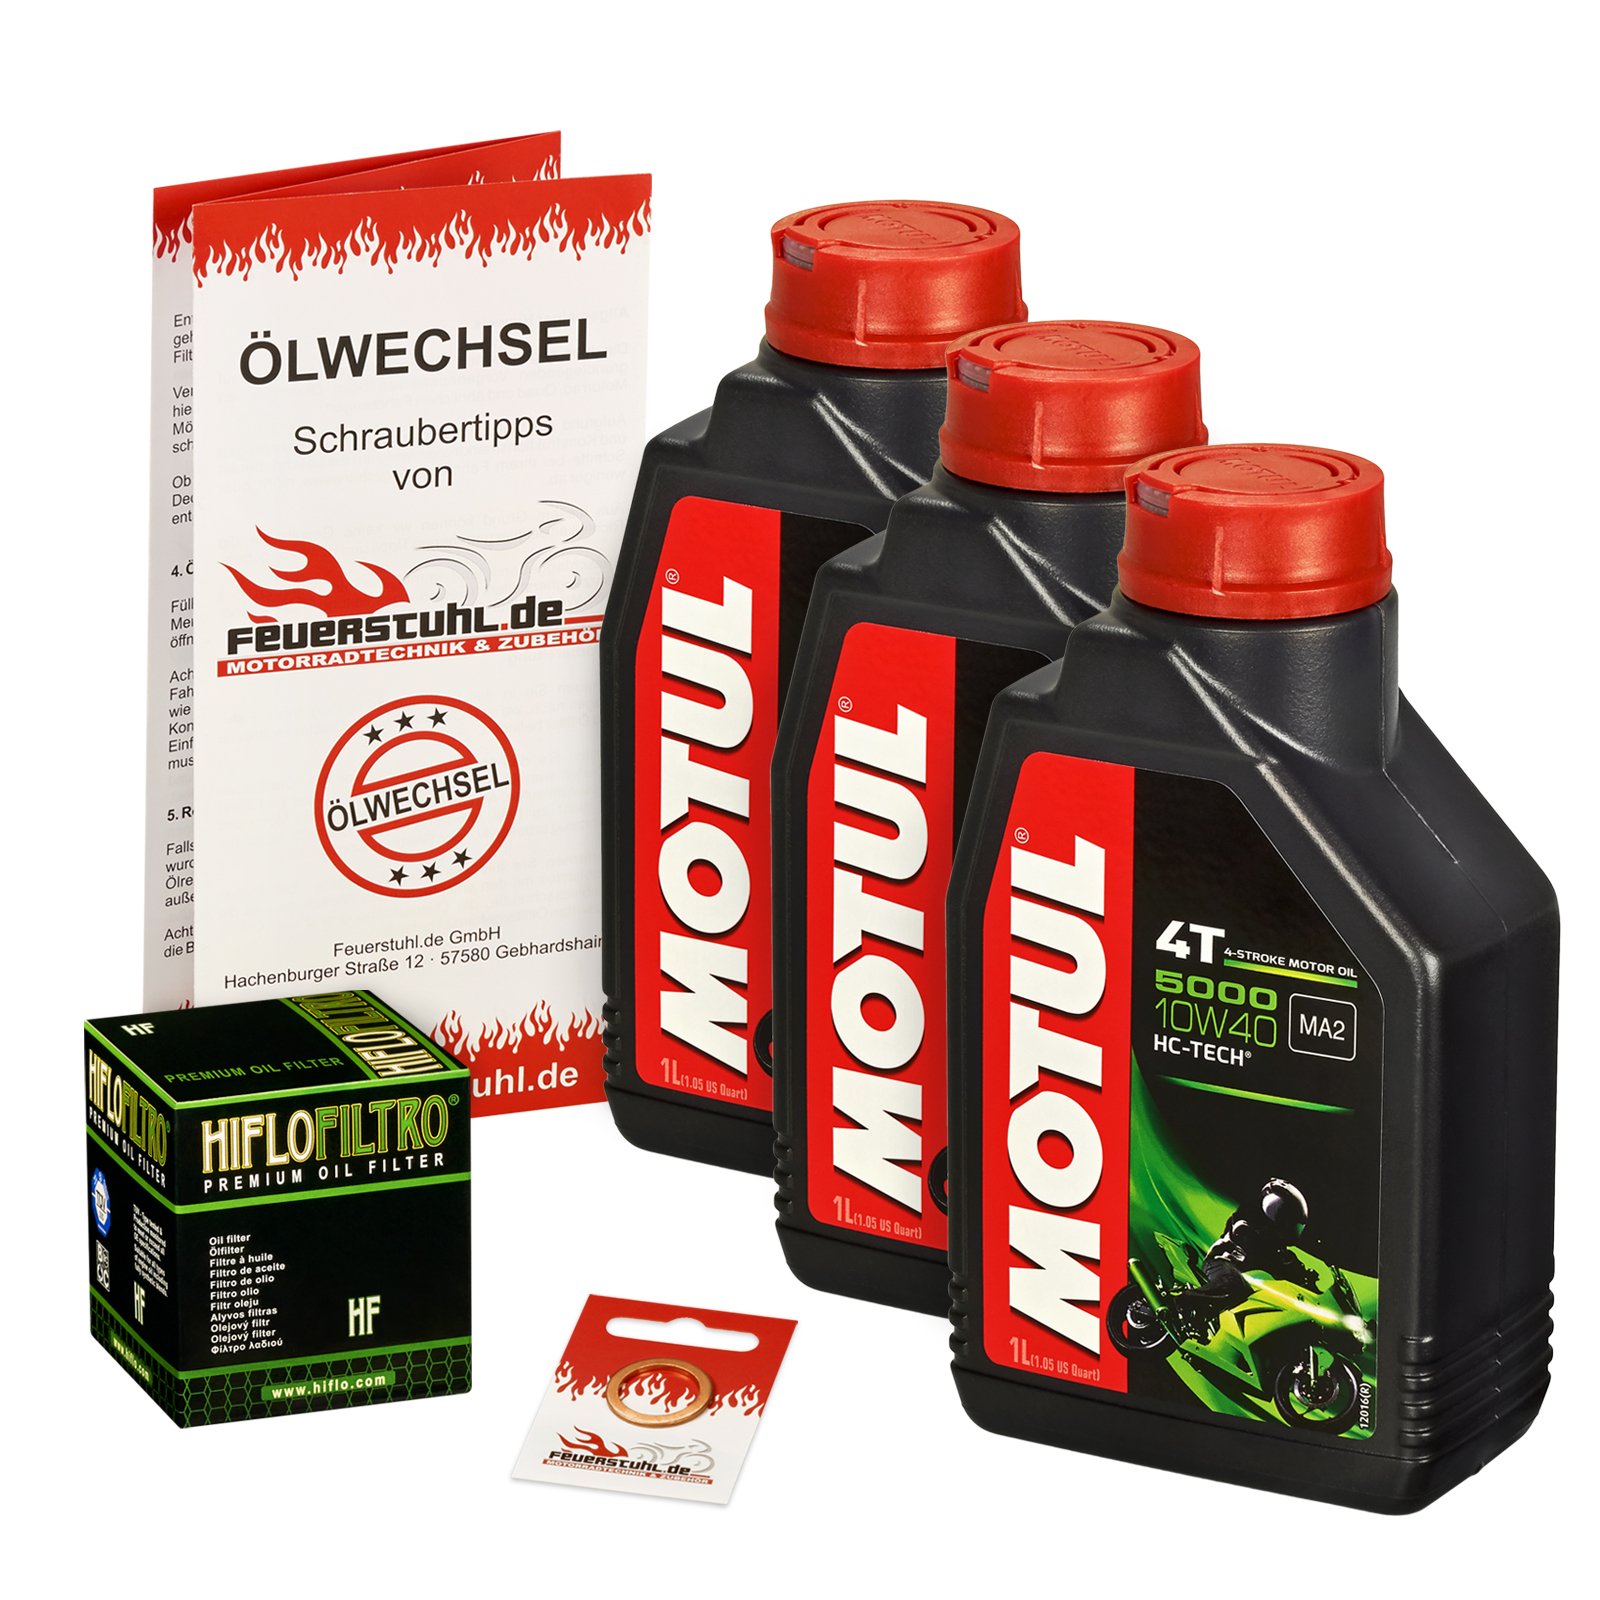 Motul 10W-40 Öl + HiFlo Ölfilter für Honda CB 400 N Euro, 78-85, CB400N - Ölwechselset inkl. Motoröl, Filter, Dichtring von Feuerstuhl.de GmbH